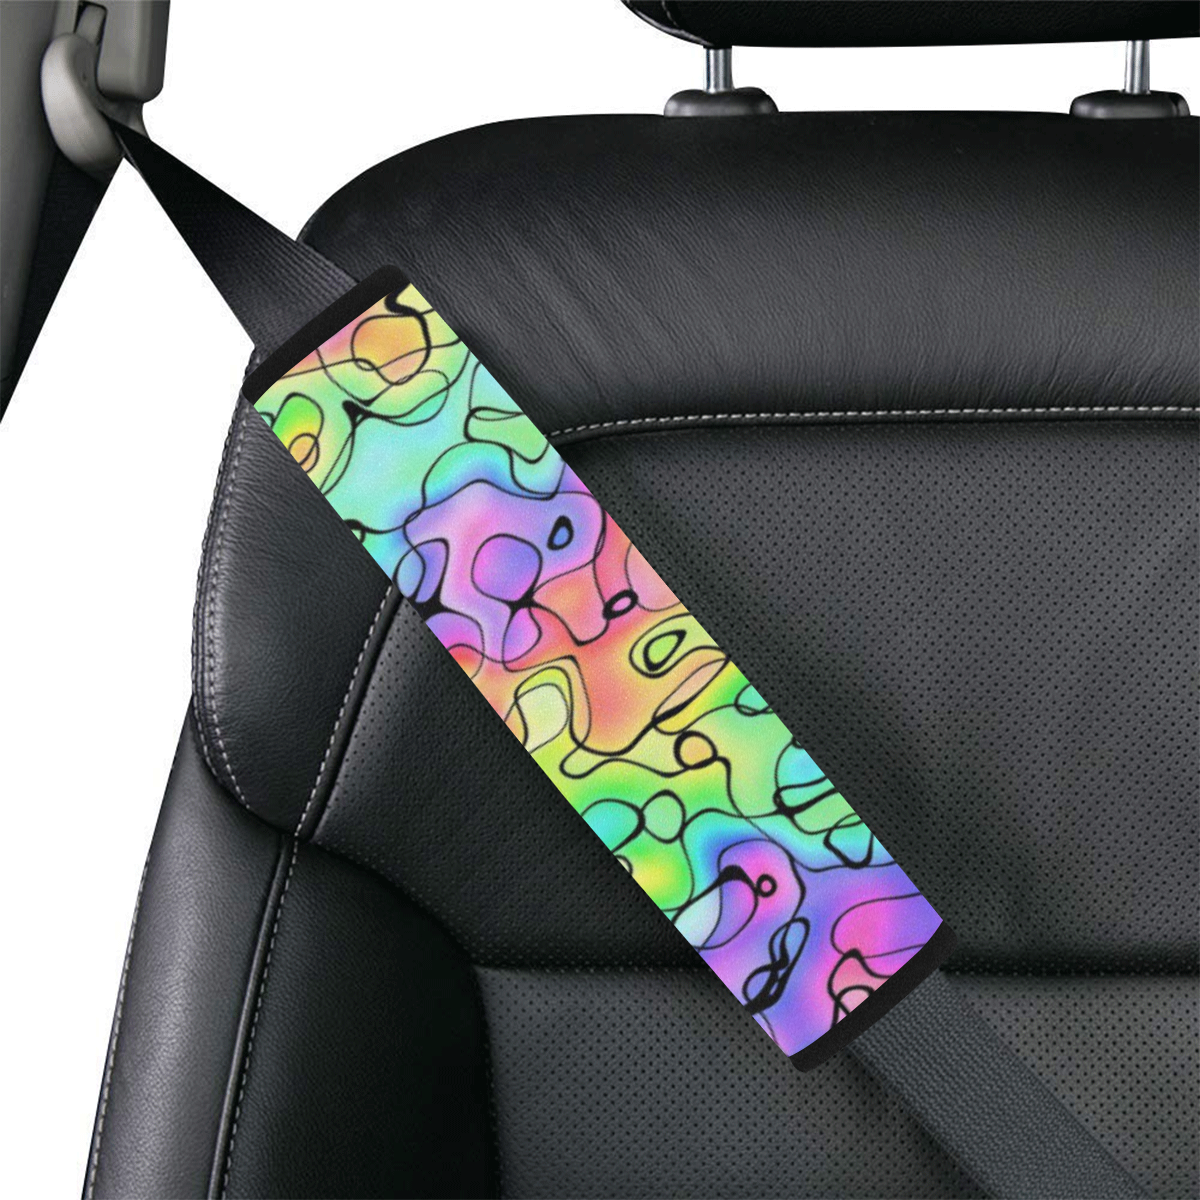 Squirlies SeatBelt Cover Car Seat Belt Cover 7''x12.6''